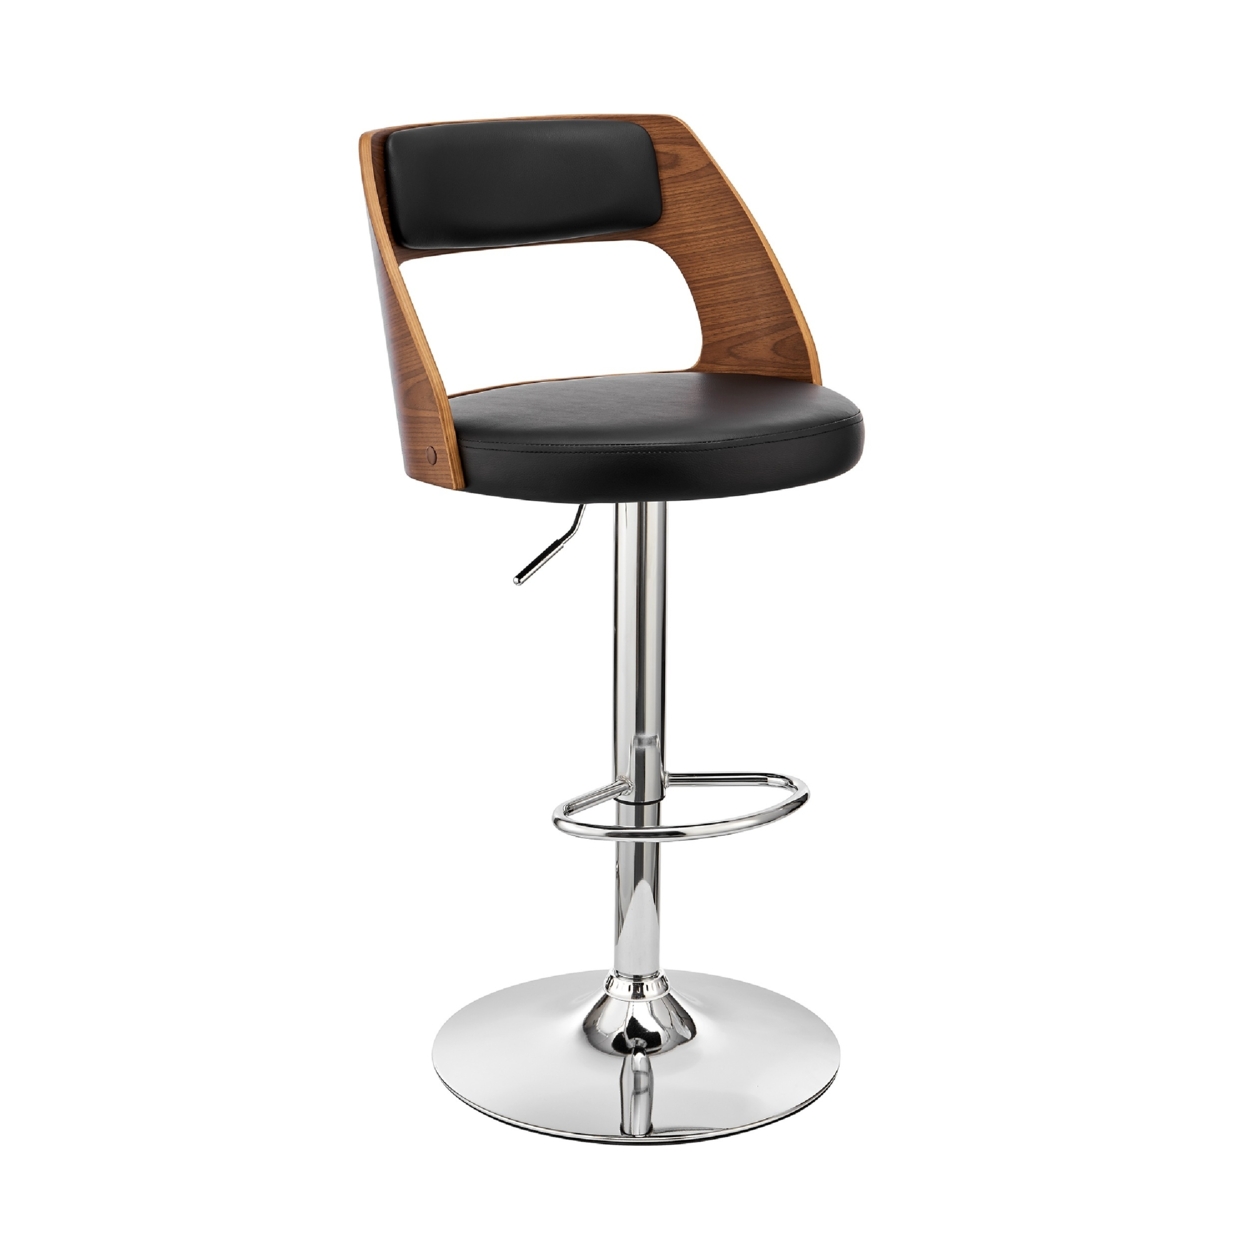 Adjustable Barstool With Open Design Wooden Back, Black And Brown- Saltoro Sherpi